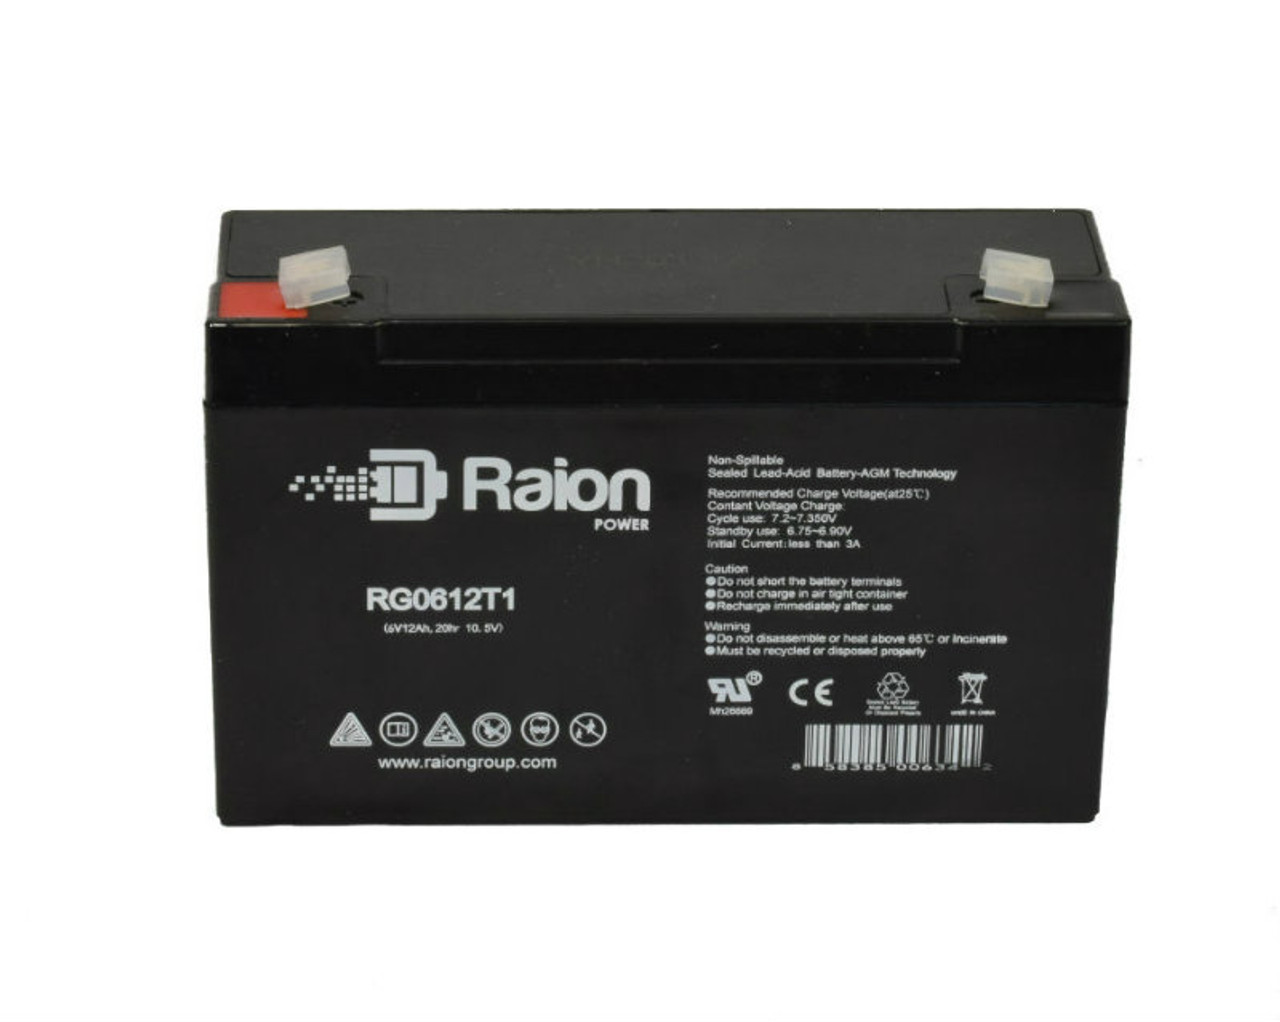 Raion Power RG06120T1 SLA Battery for Technacell EP695